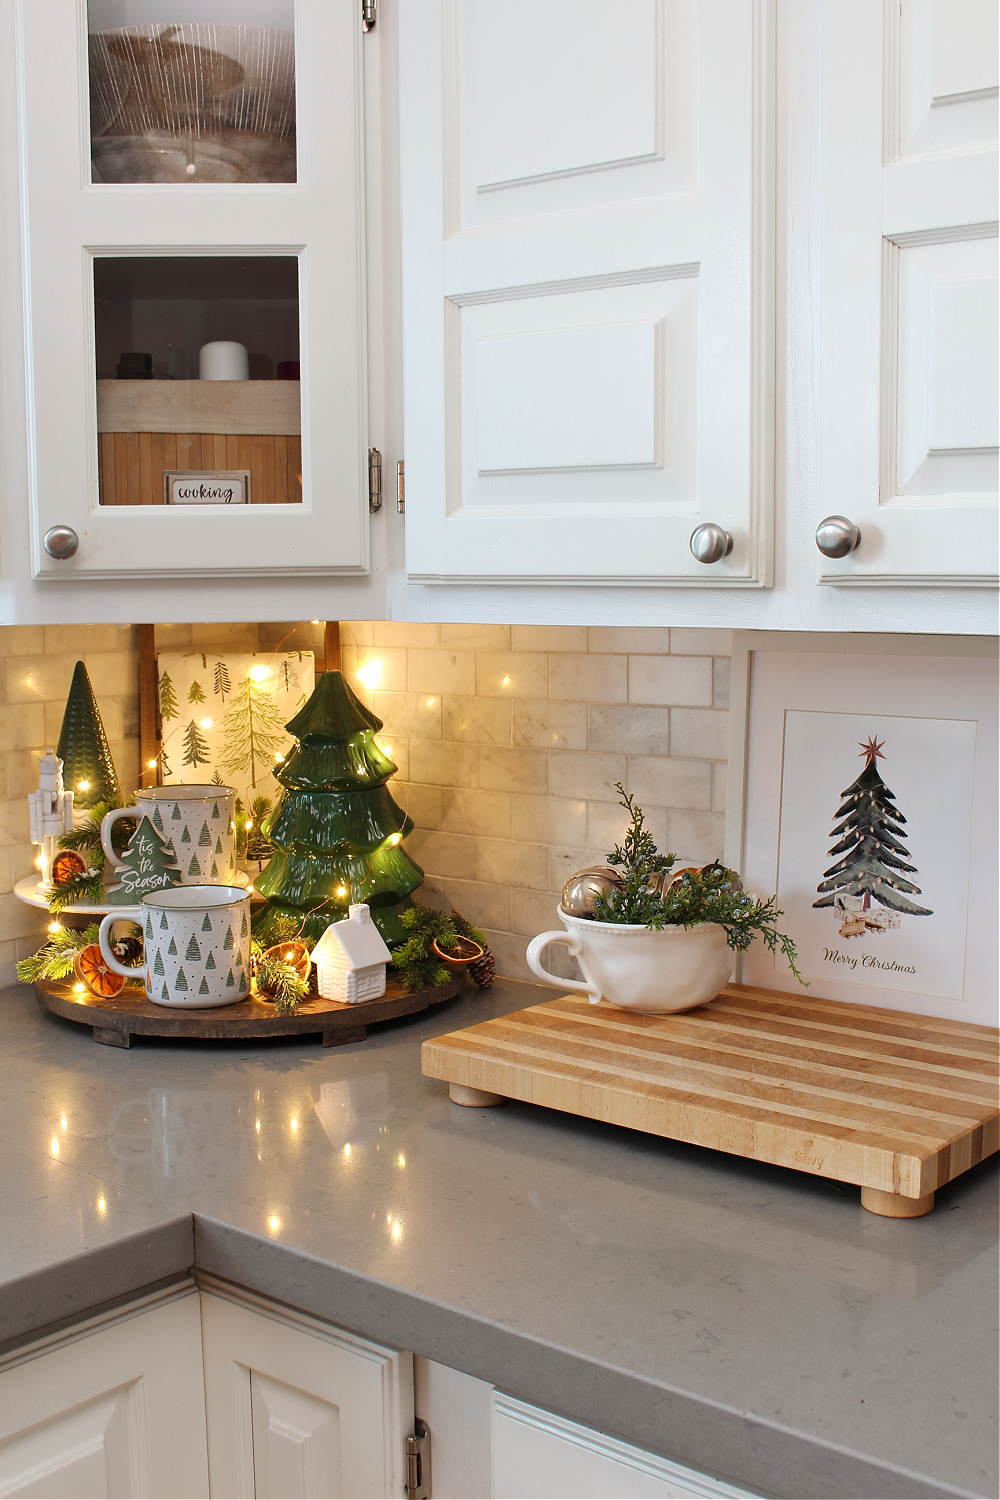 White Christmas kitchen with Christmas tree decor and Christmas tree art.